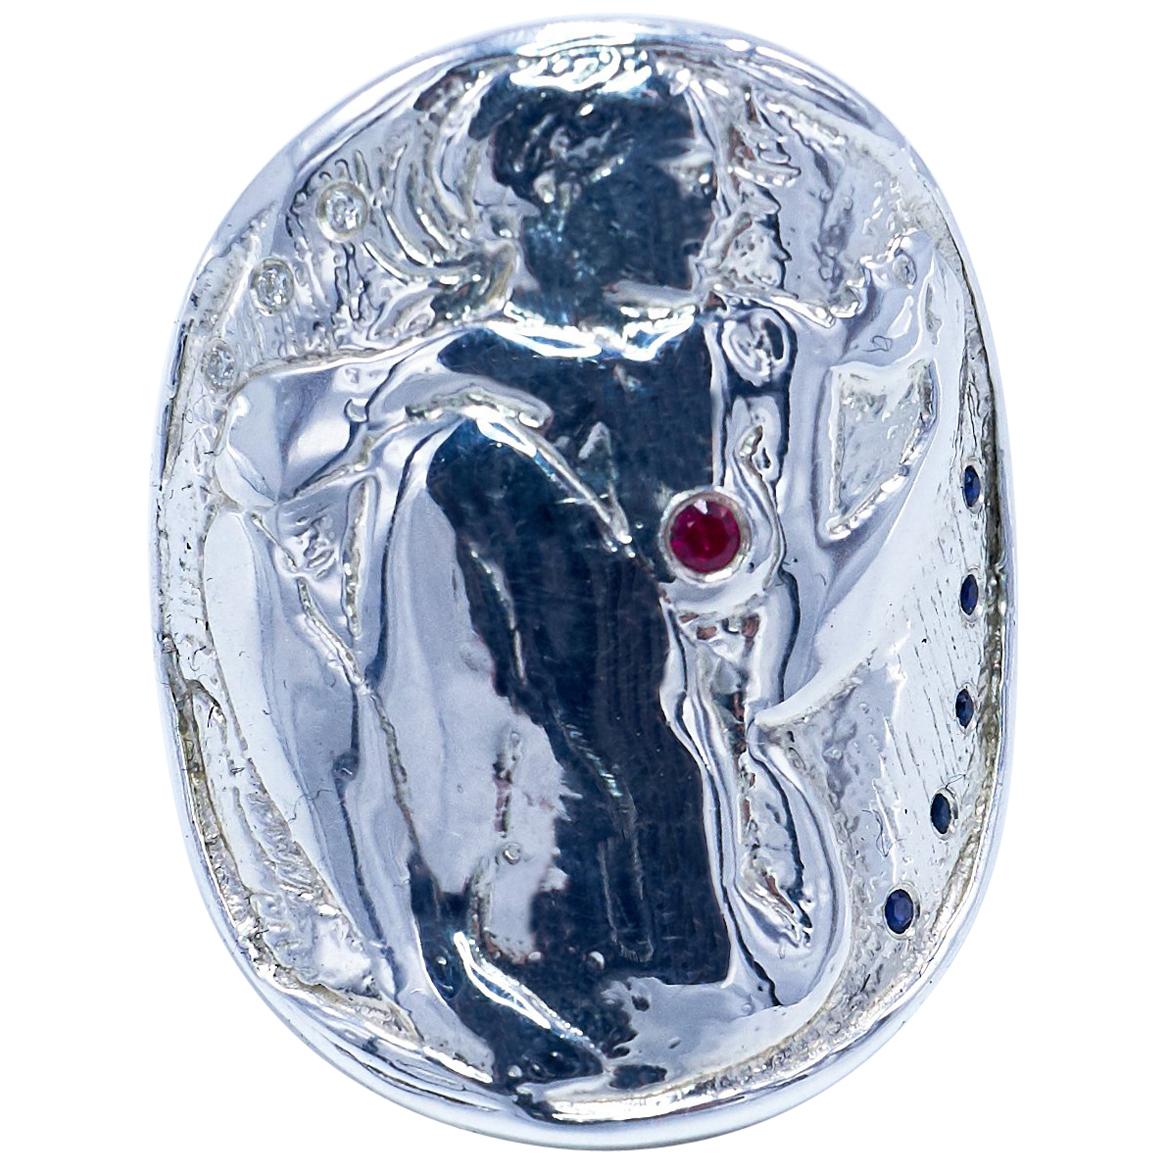 Cocktail Ring Medal Coin Silver Woman White Diamond Ruby Blue SapphireJ Dauphin

J DAUPHIN 